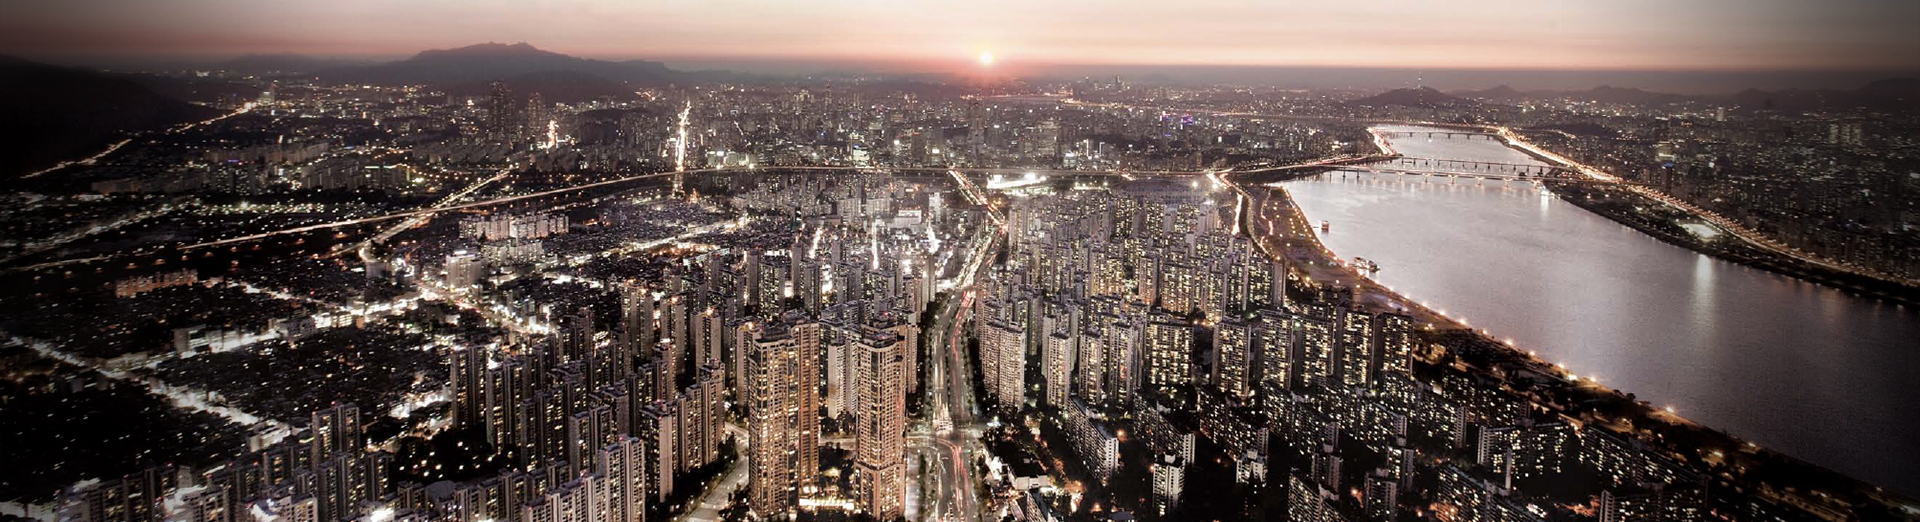 West: Panorama of Gangnam, Teheran-ro, COEX, and Jamsil Stadium 